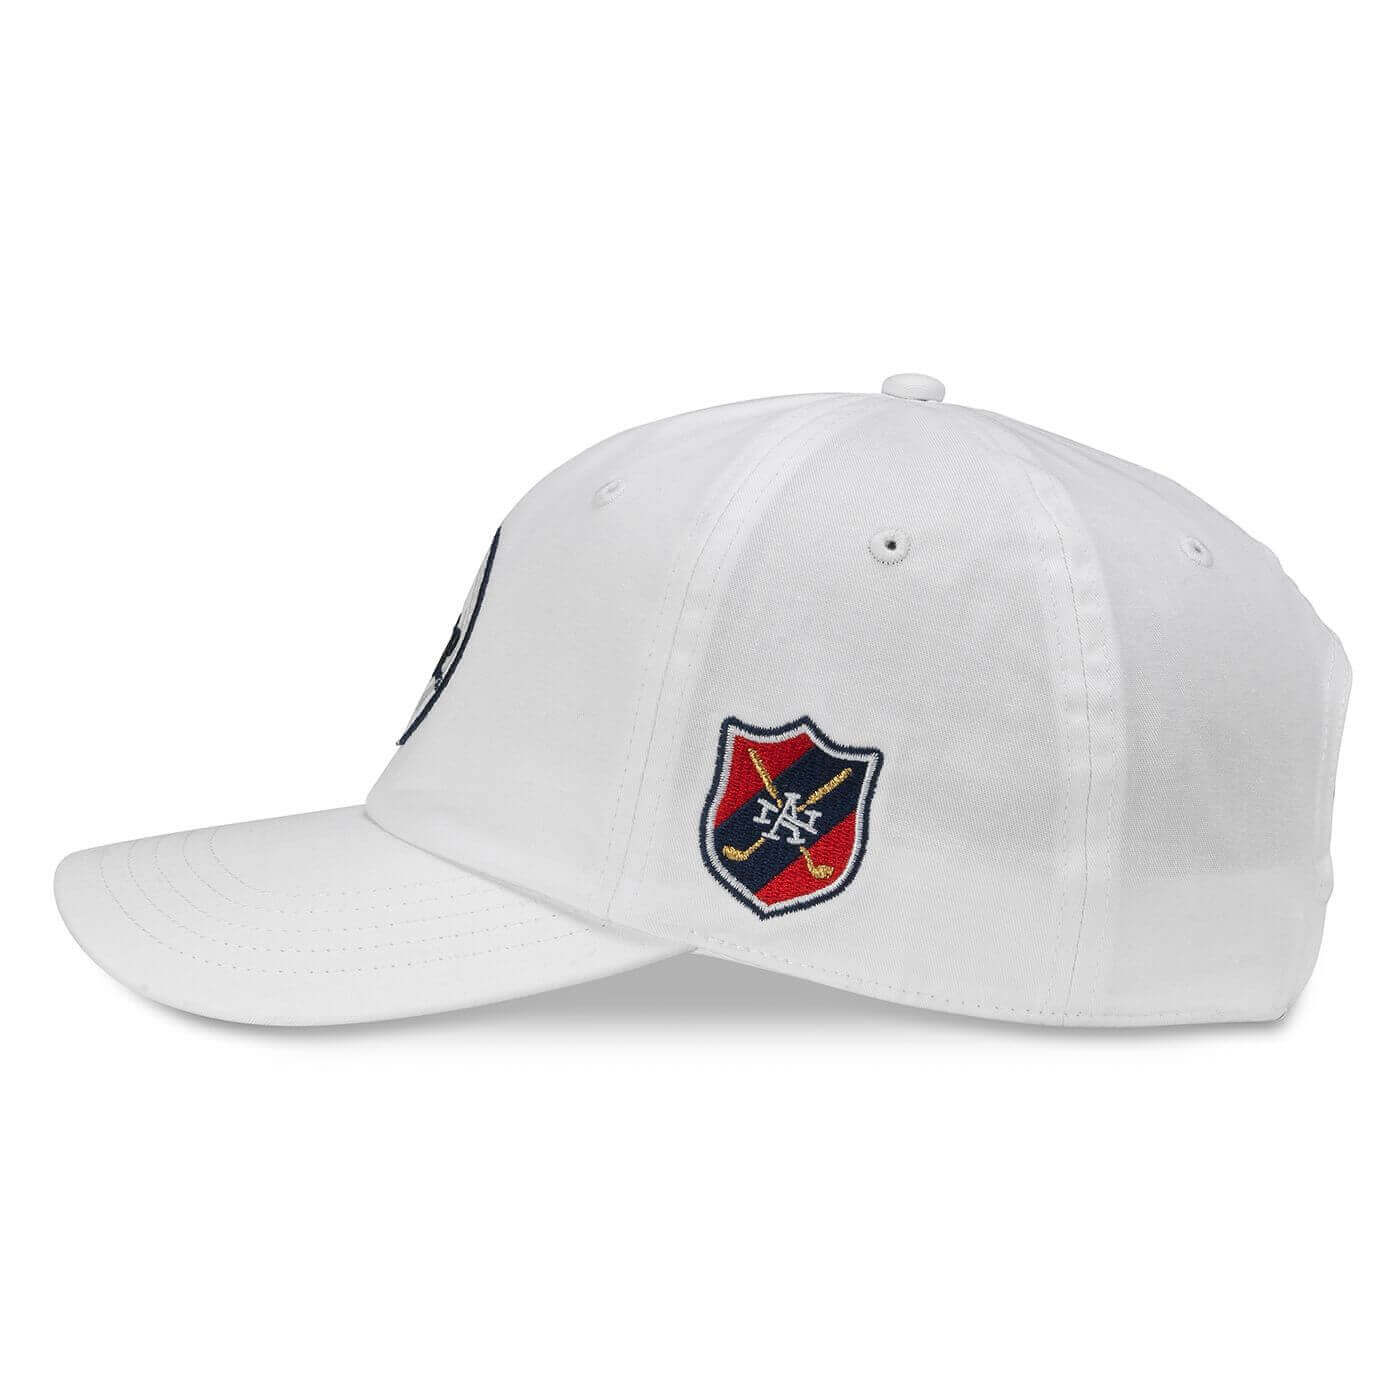 Miller Lite Hats: White Snapback Golf Hat | Beer 19th Hole 2